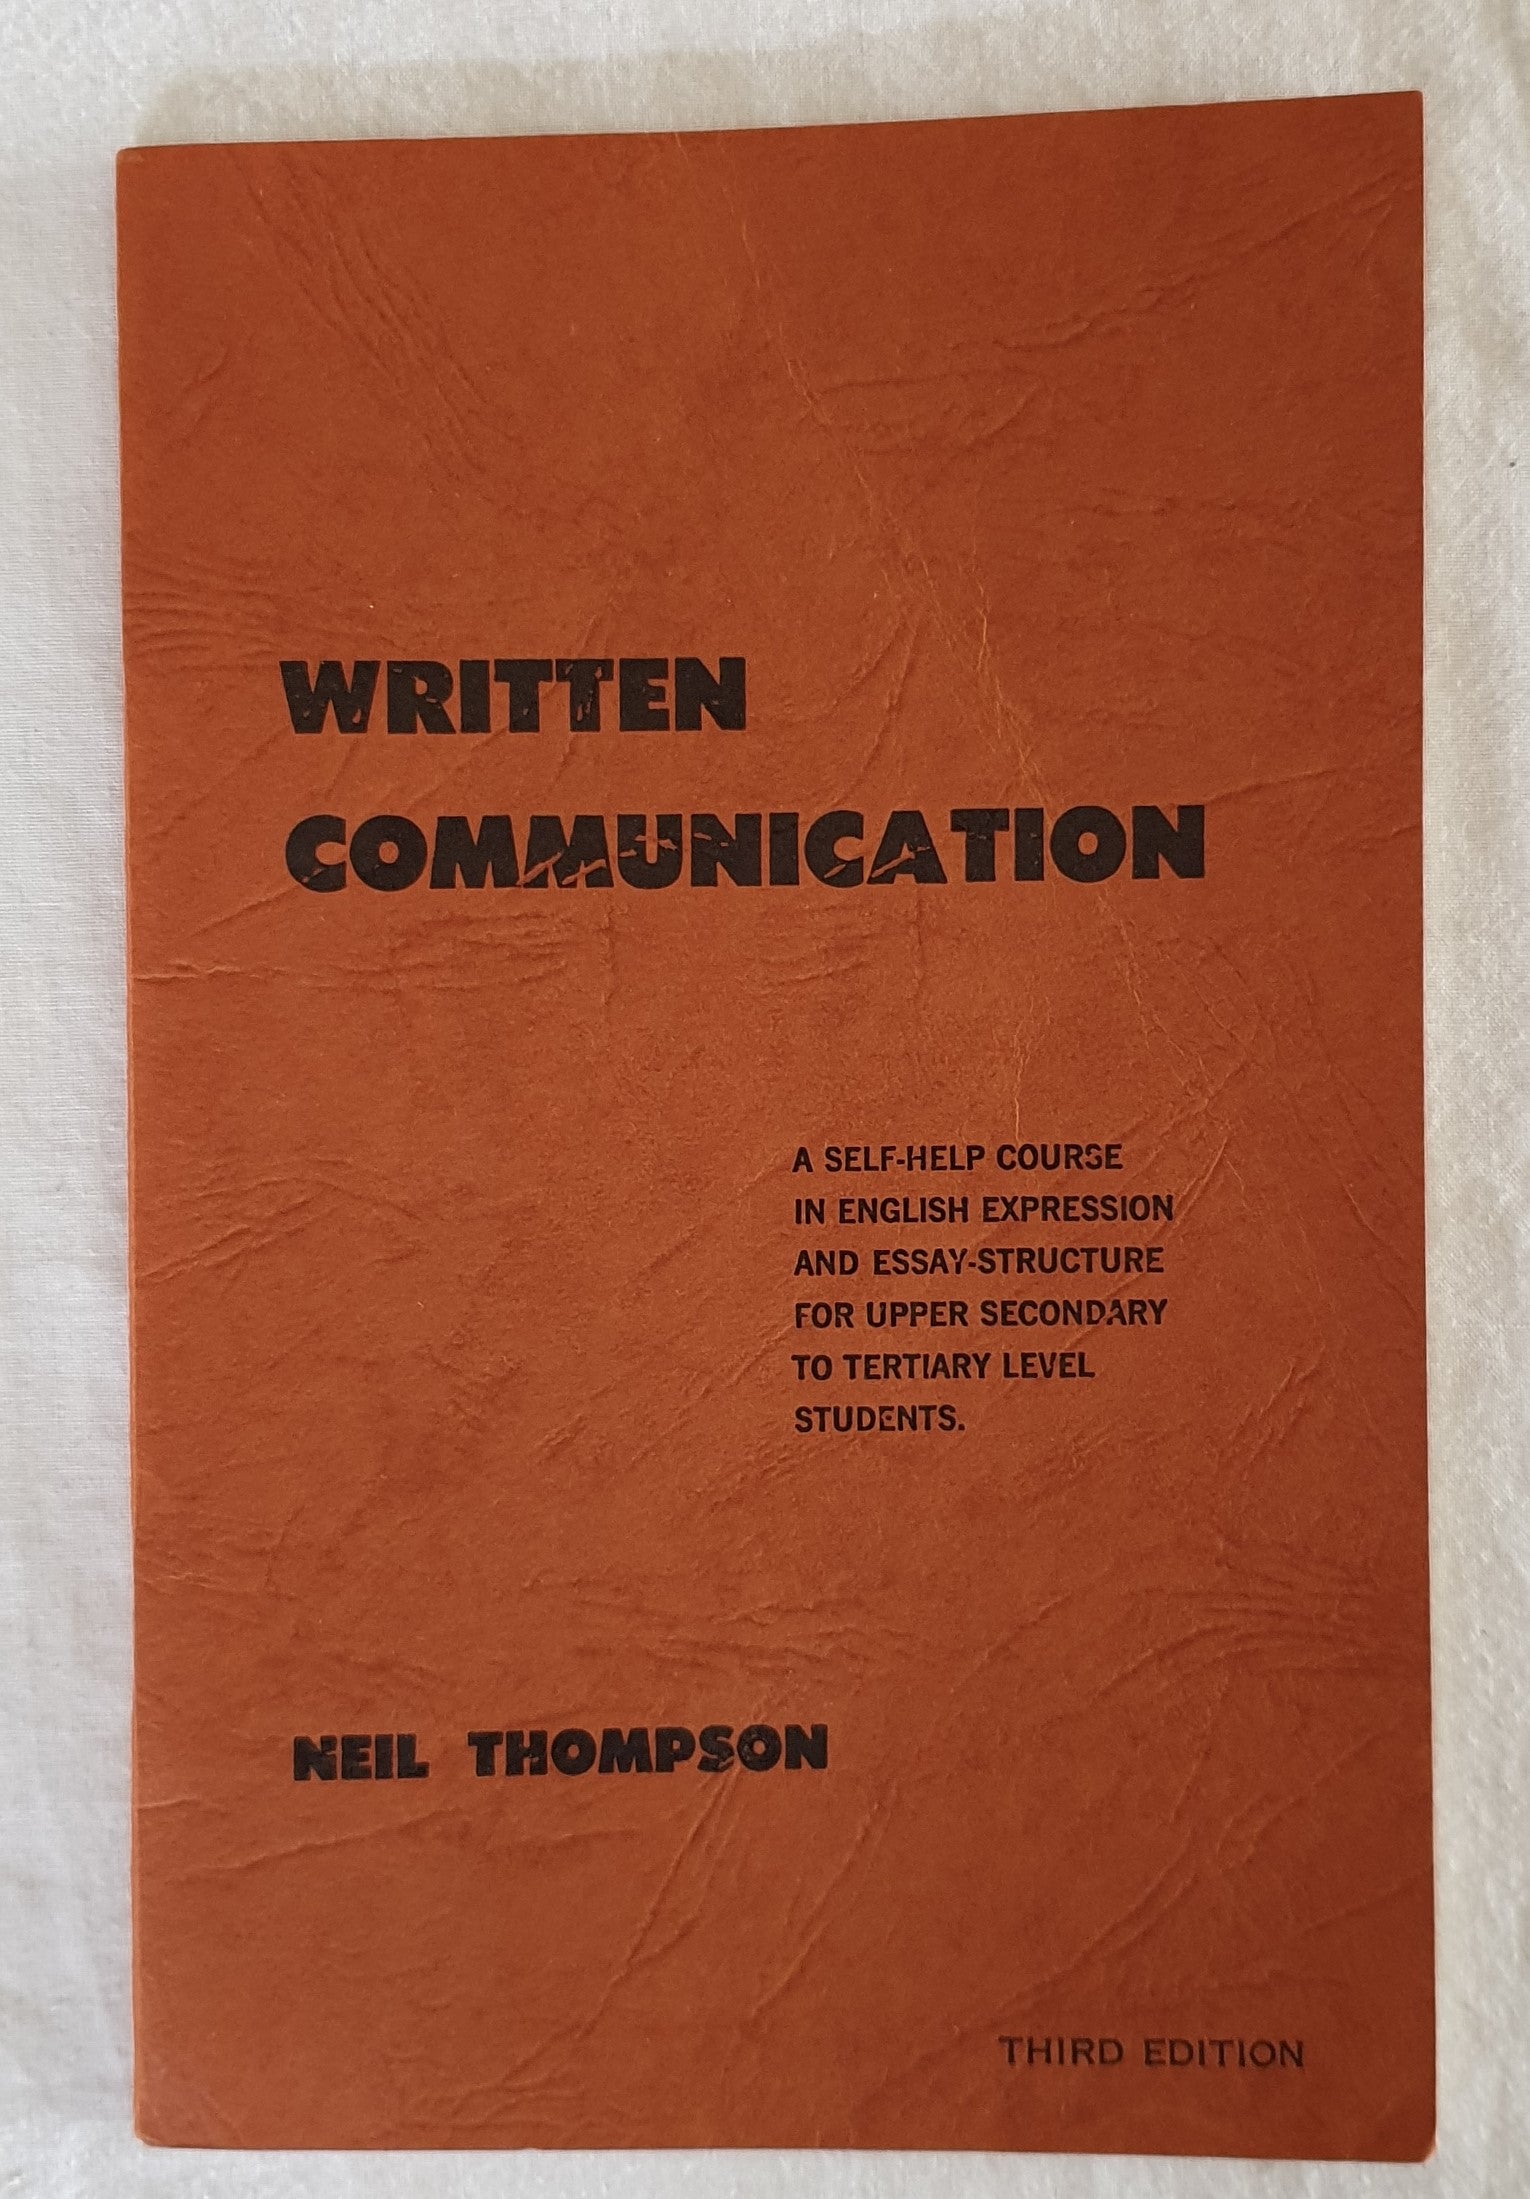 Written Communication by Neil Thompson